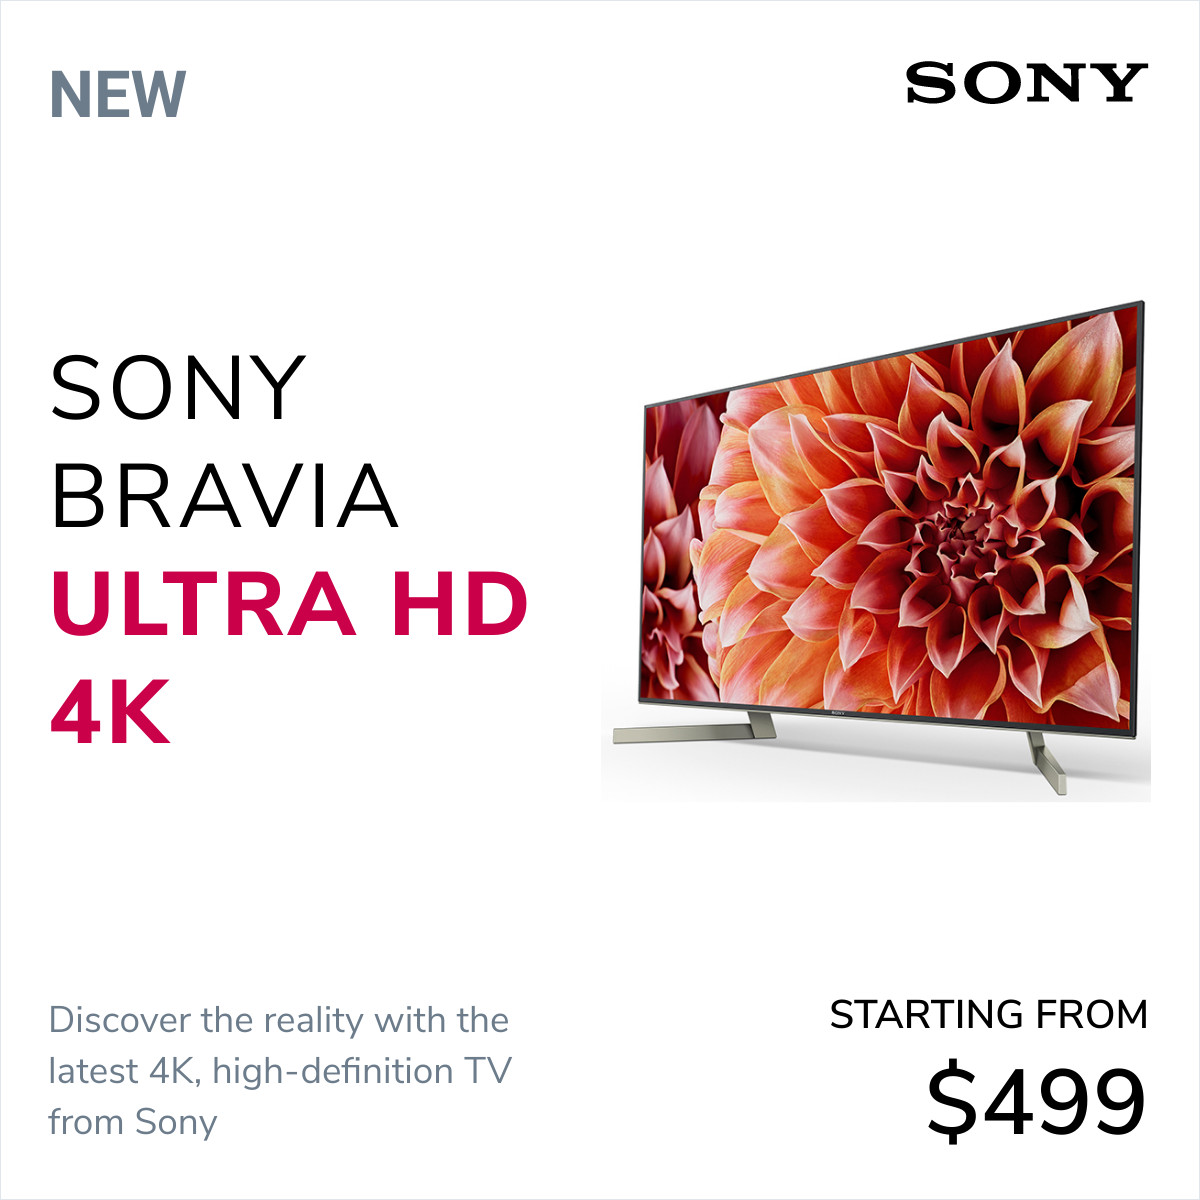 Sony Bravia Ultra HD